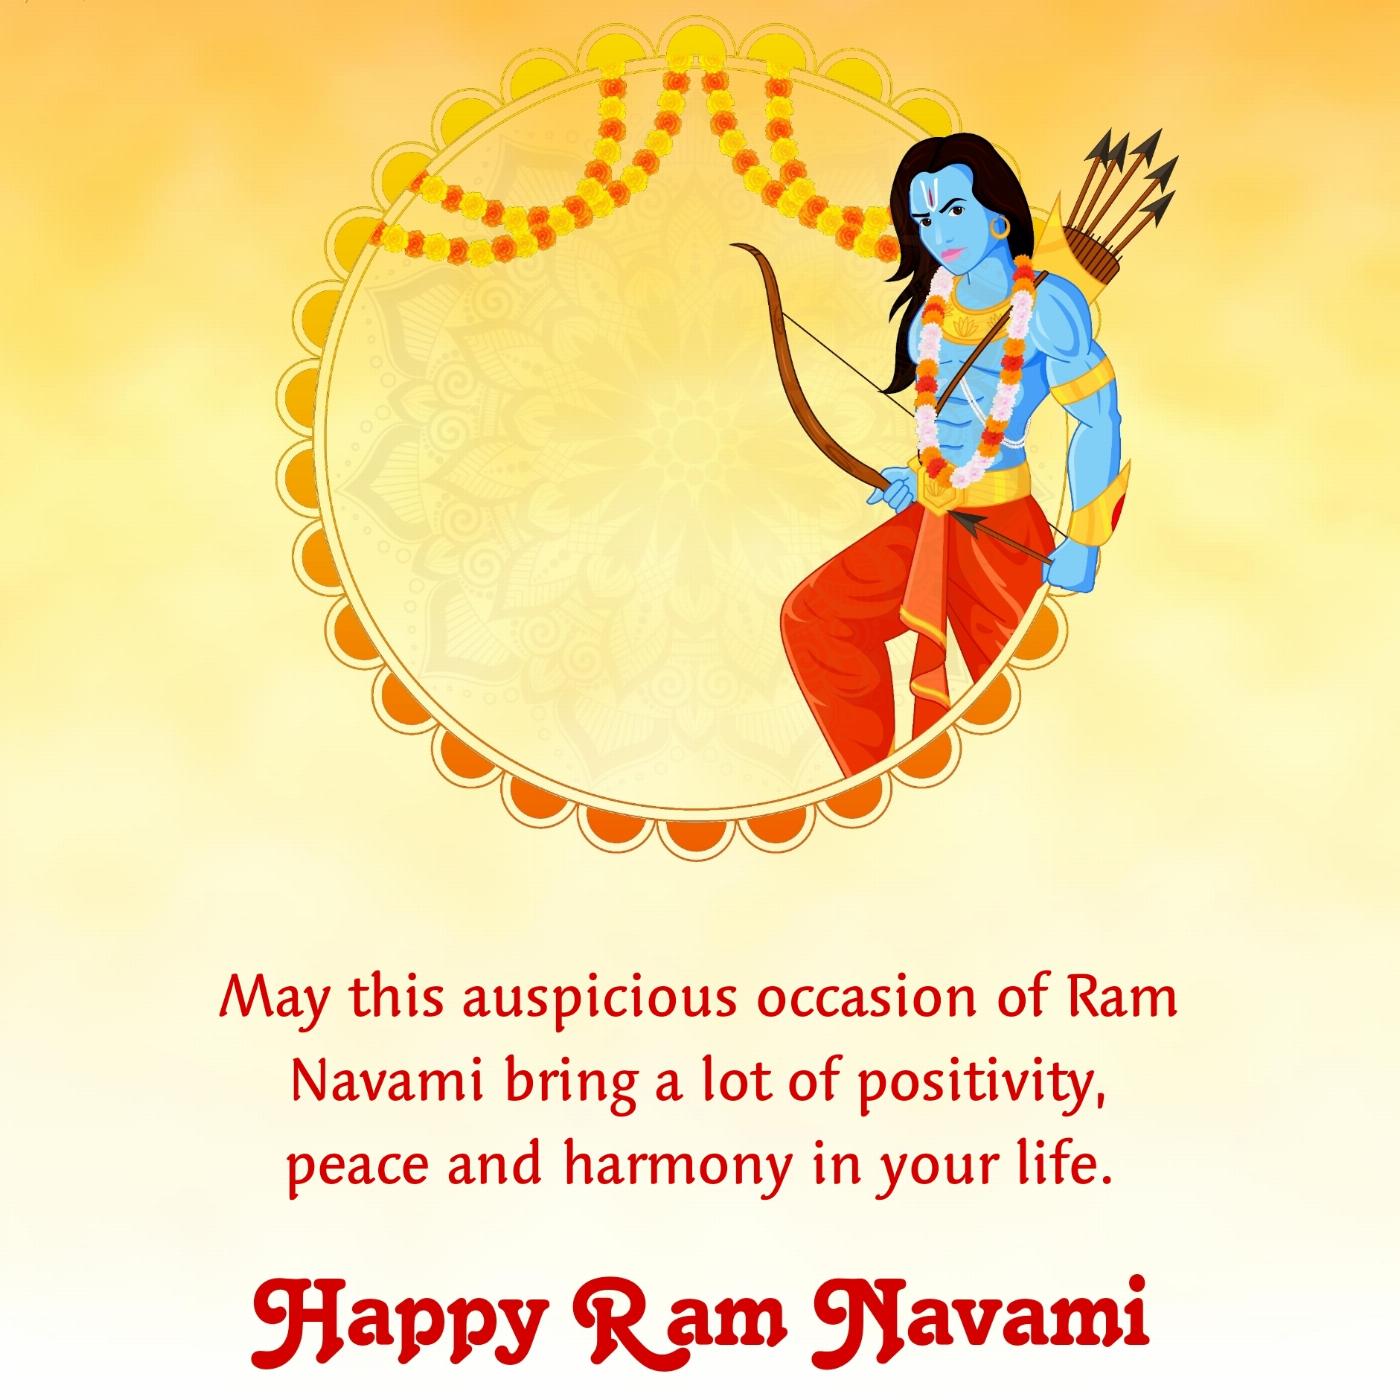 May this auspicious occasion of Ram Navami